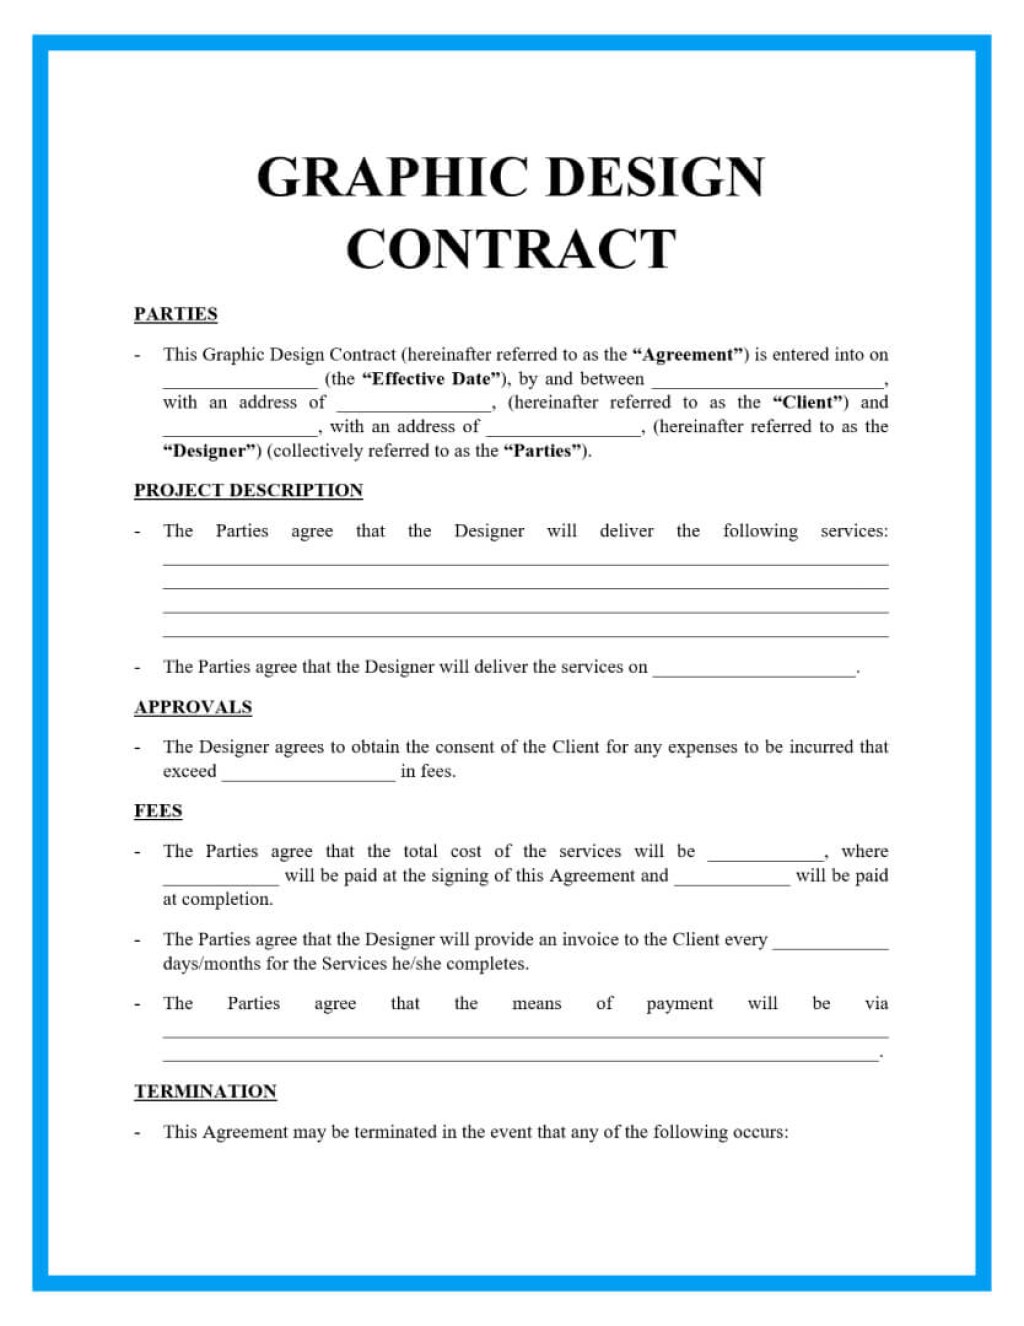 fashion designer contract template - Free Graphic Design Contract (Includes Free Template)